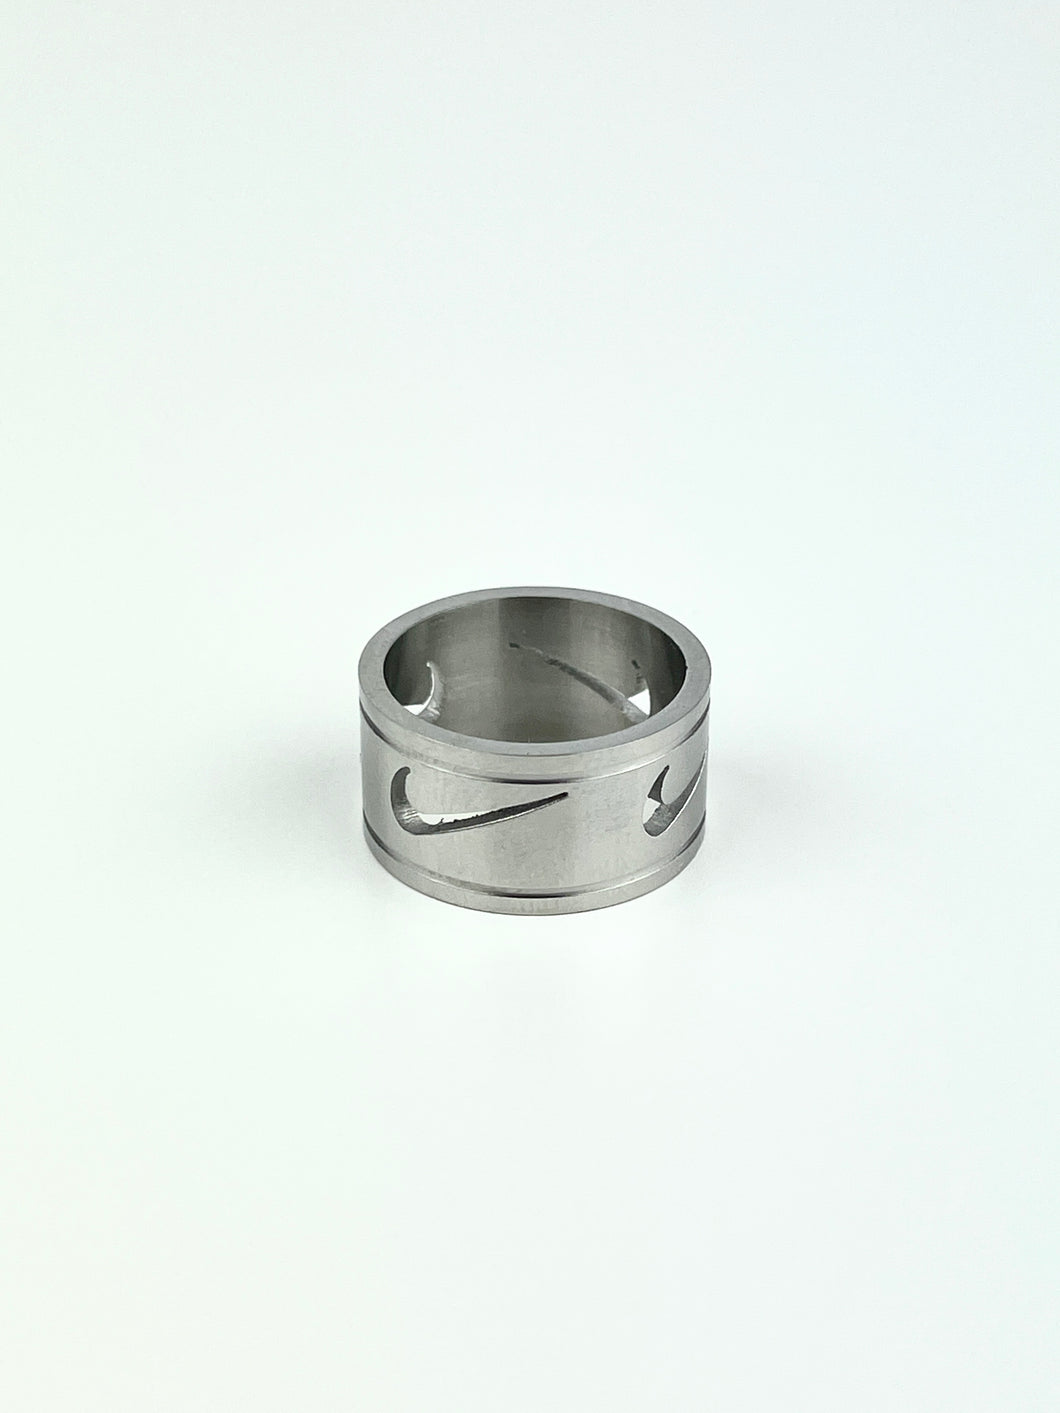 Nike Stainless Steel Ring